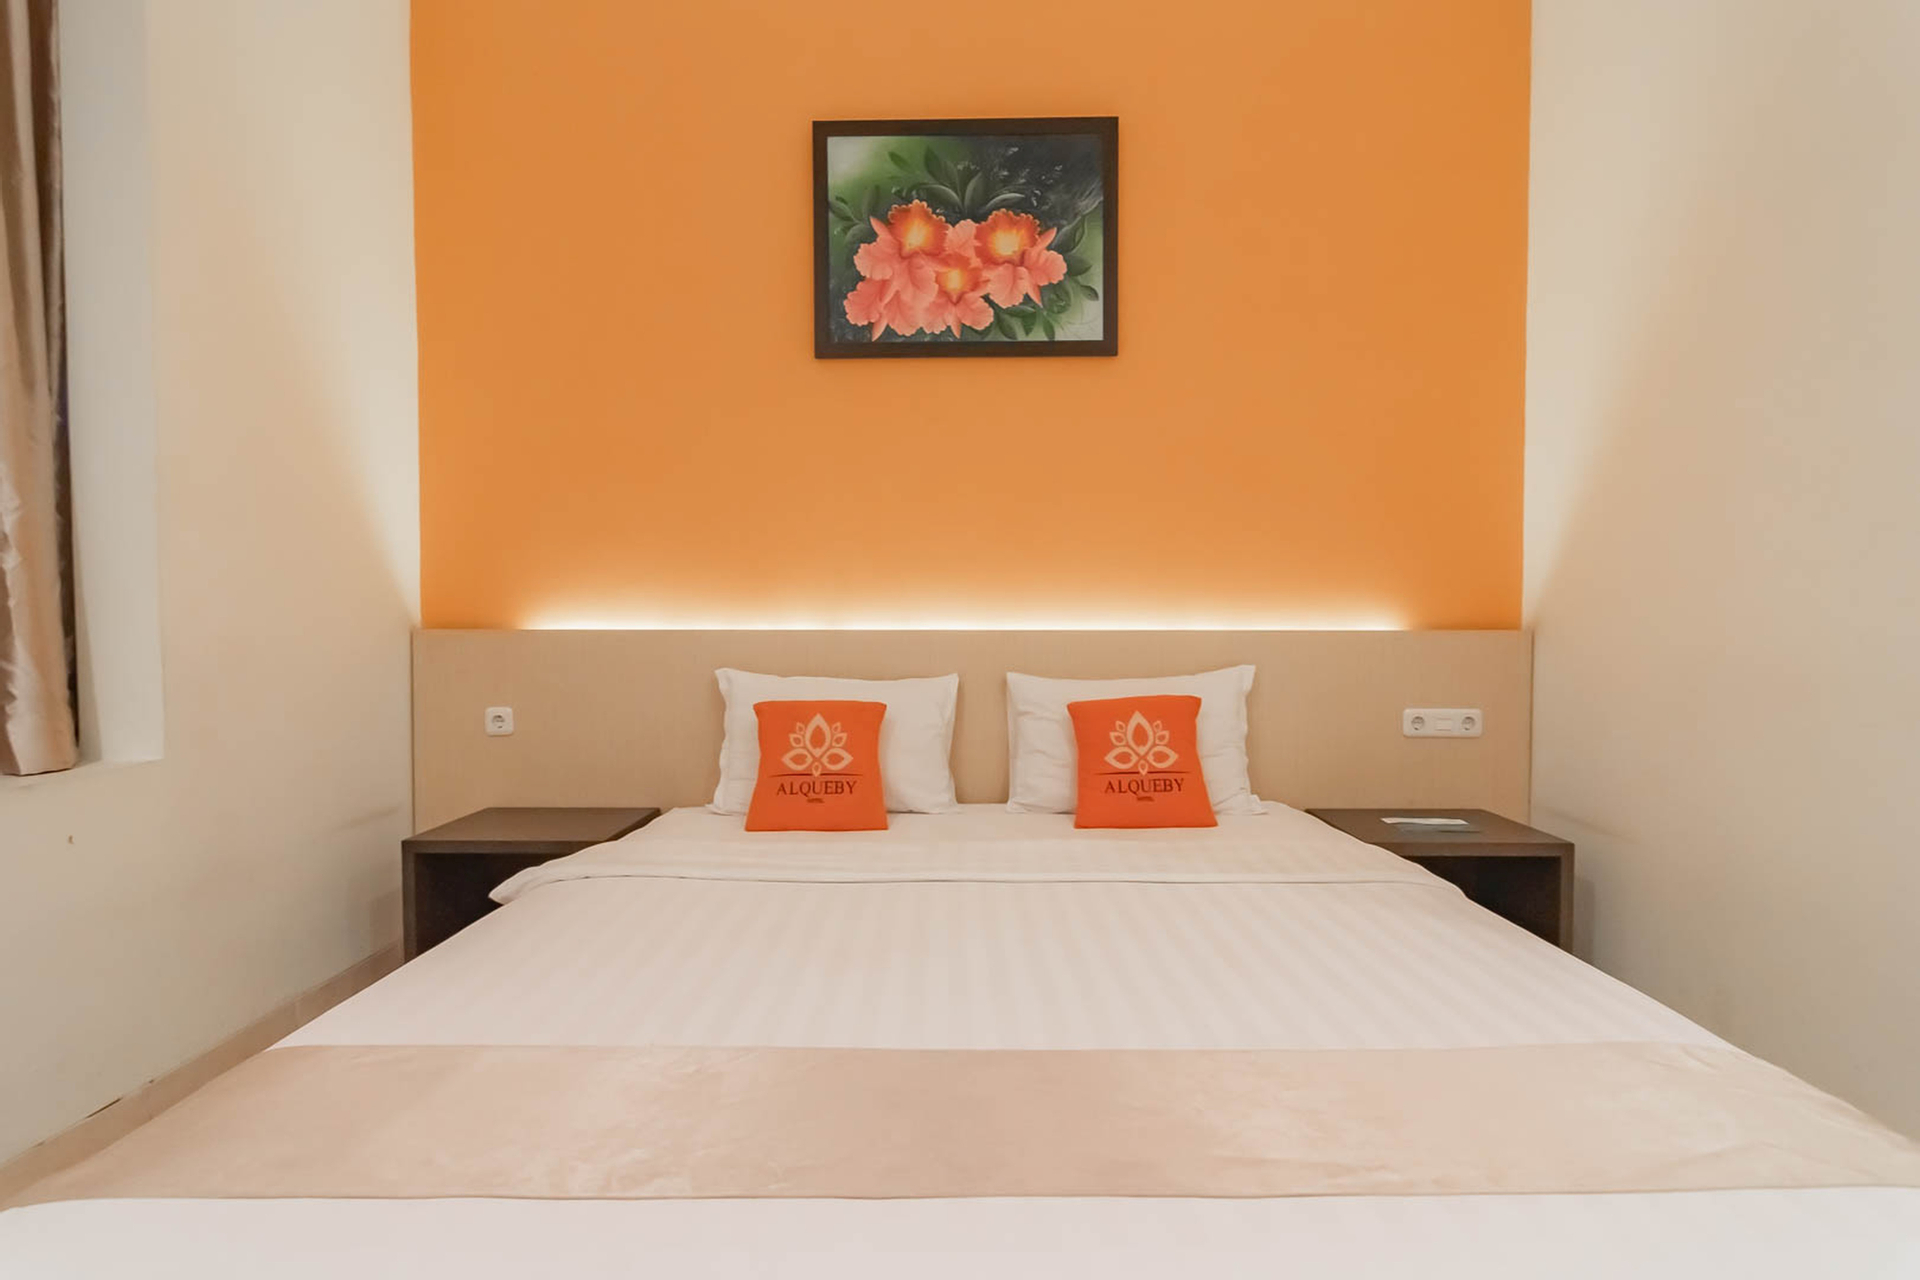 Bedroom 2, Hotel Alqueby RedPartner, Bandung